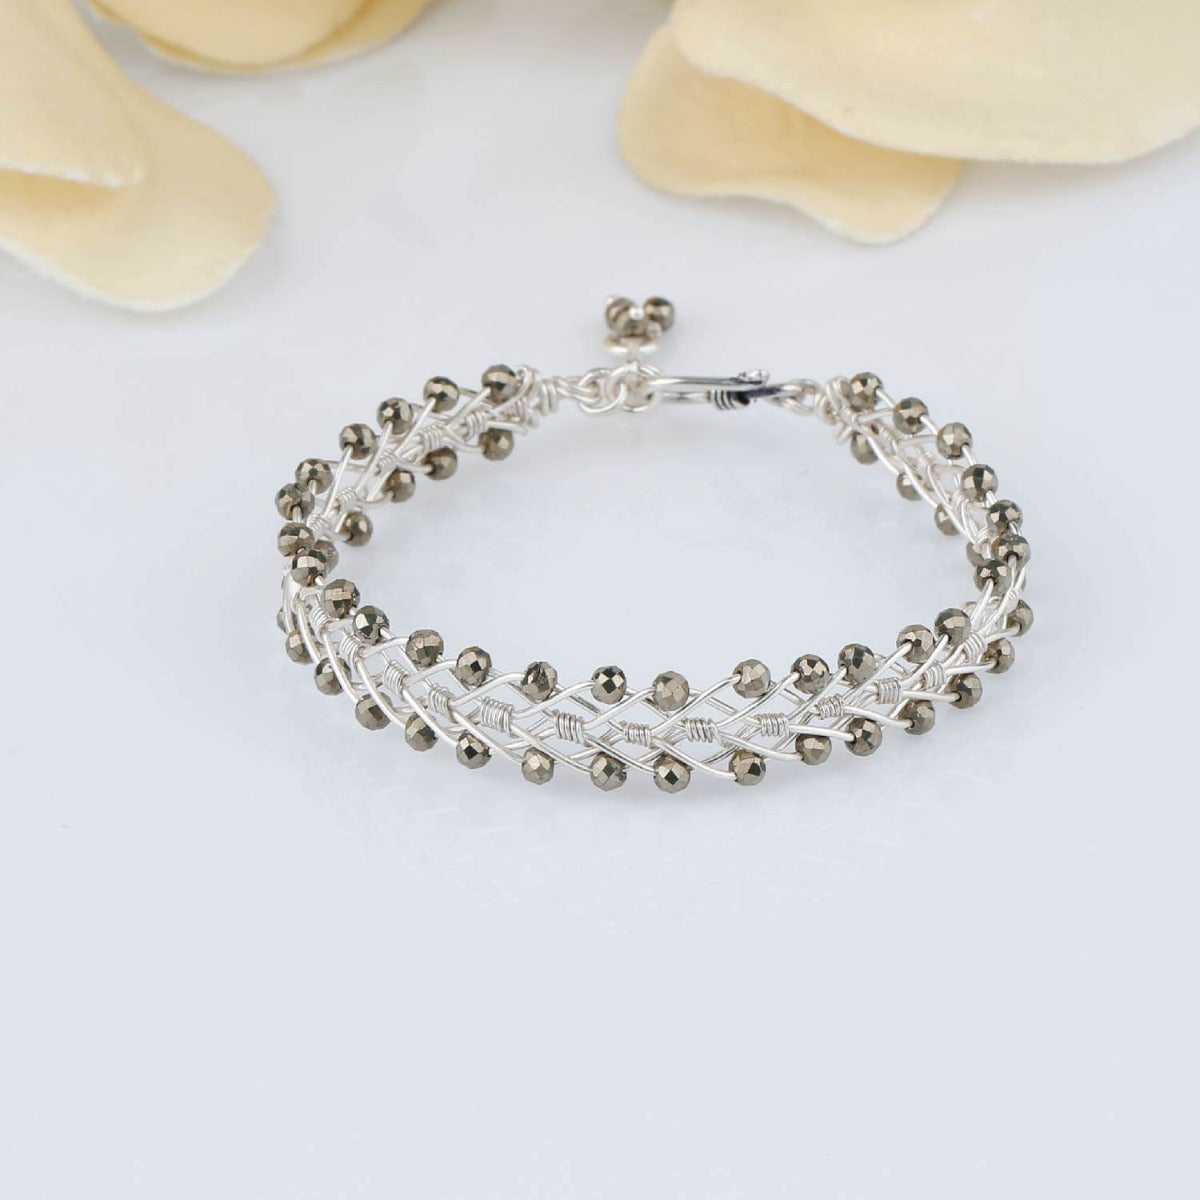 Pyrite beads sterling silver bracelet